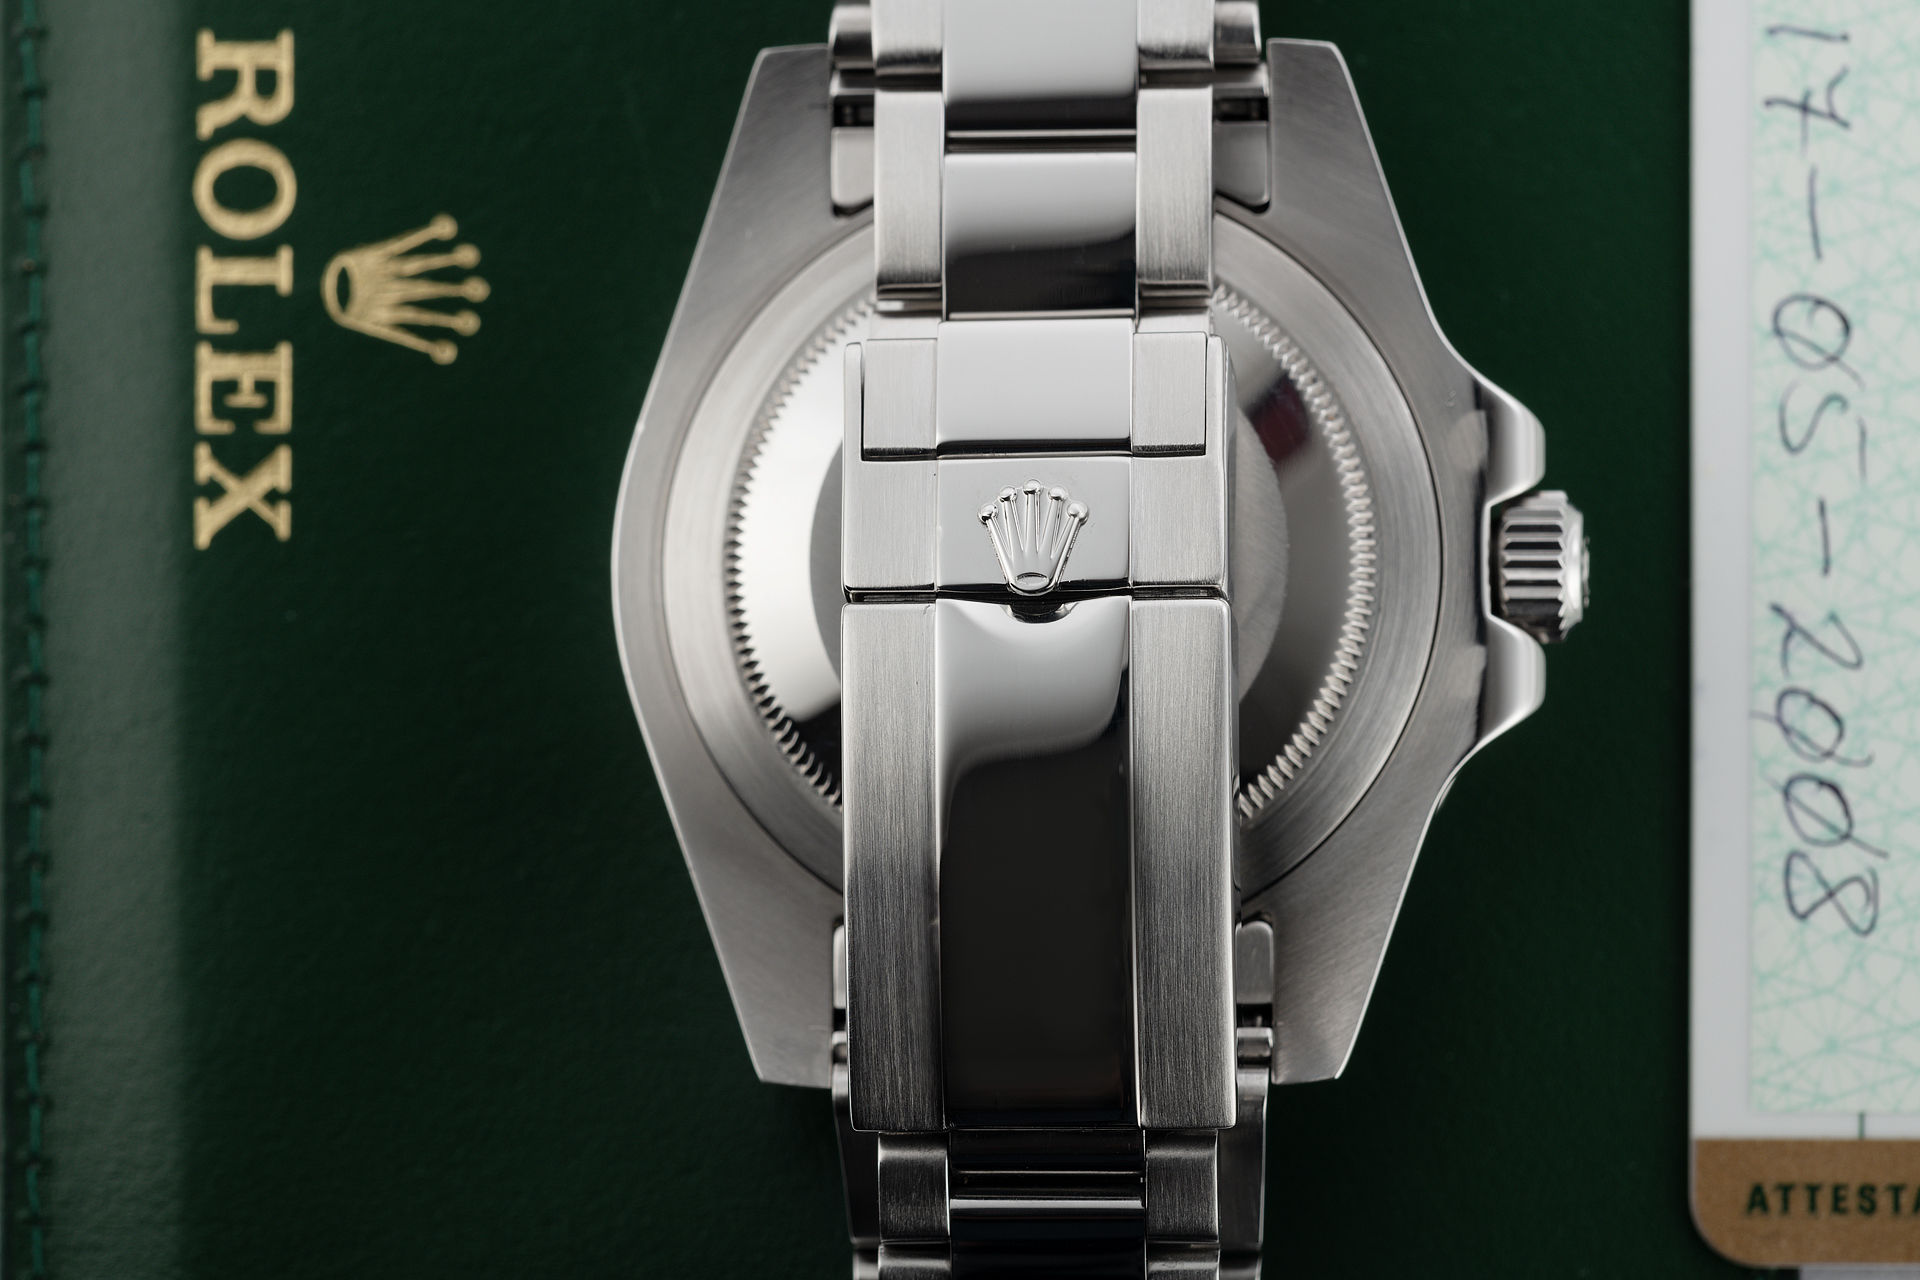 ref 116710LN | 'Green Hand' Cerachrom Bezel | Rolex GMT-Master II